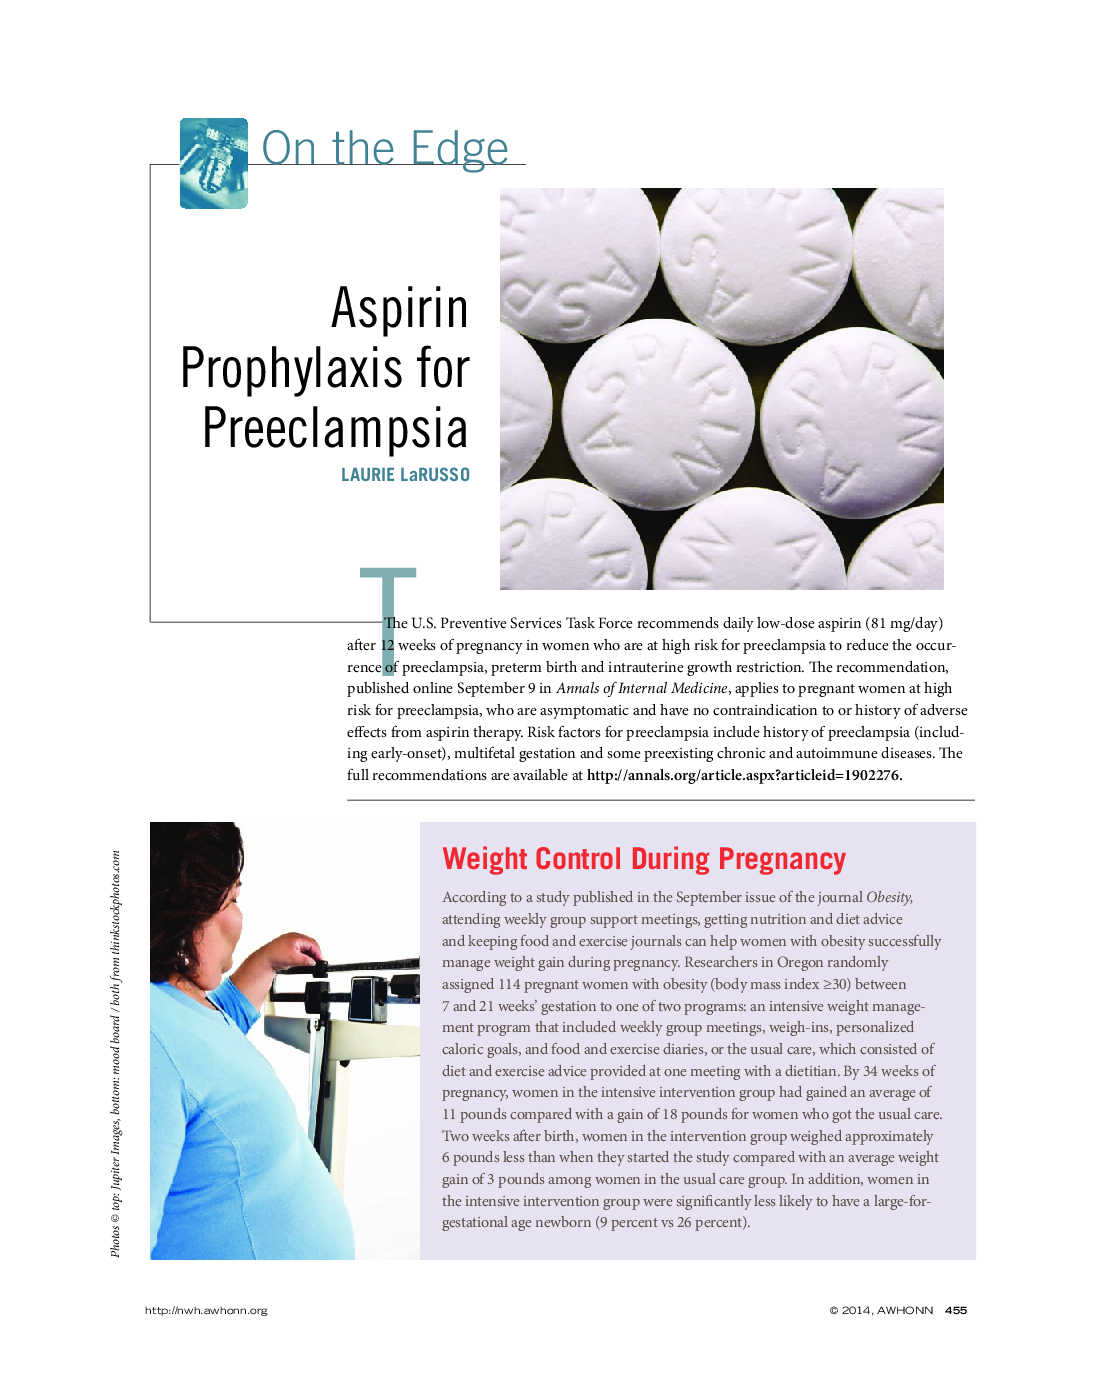 Aspirin Prophylaxis for Preeclampsia